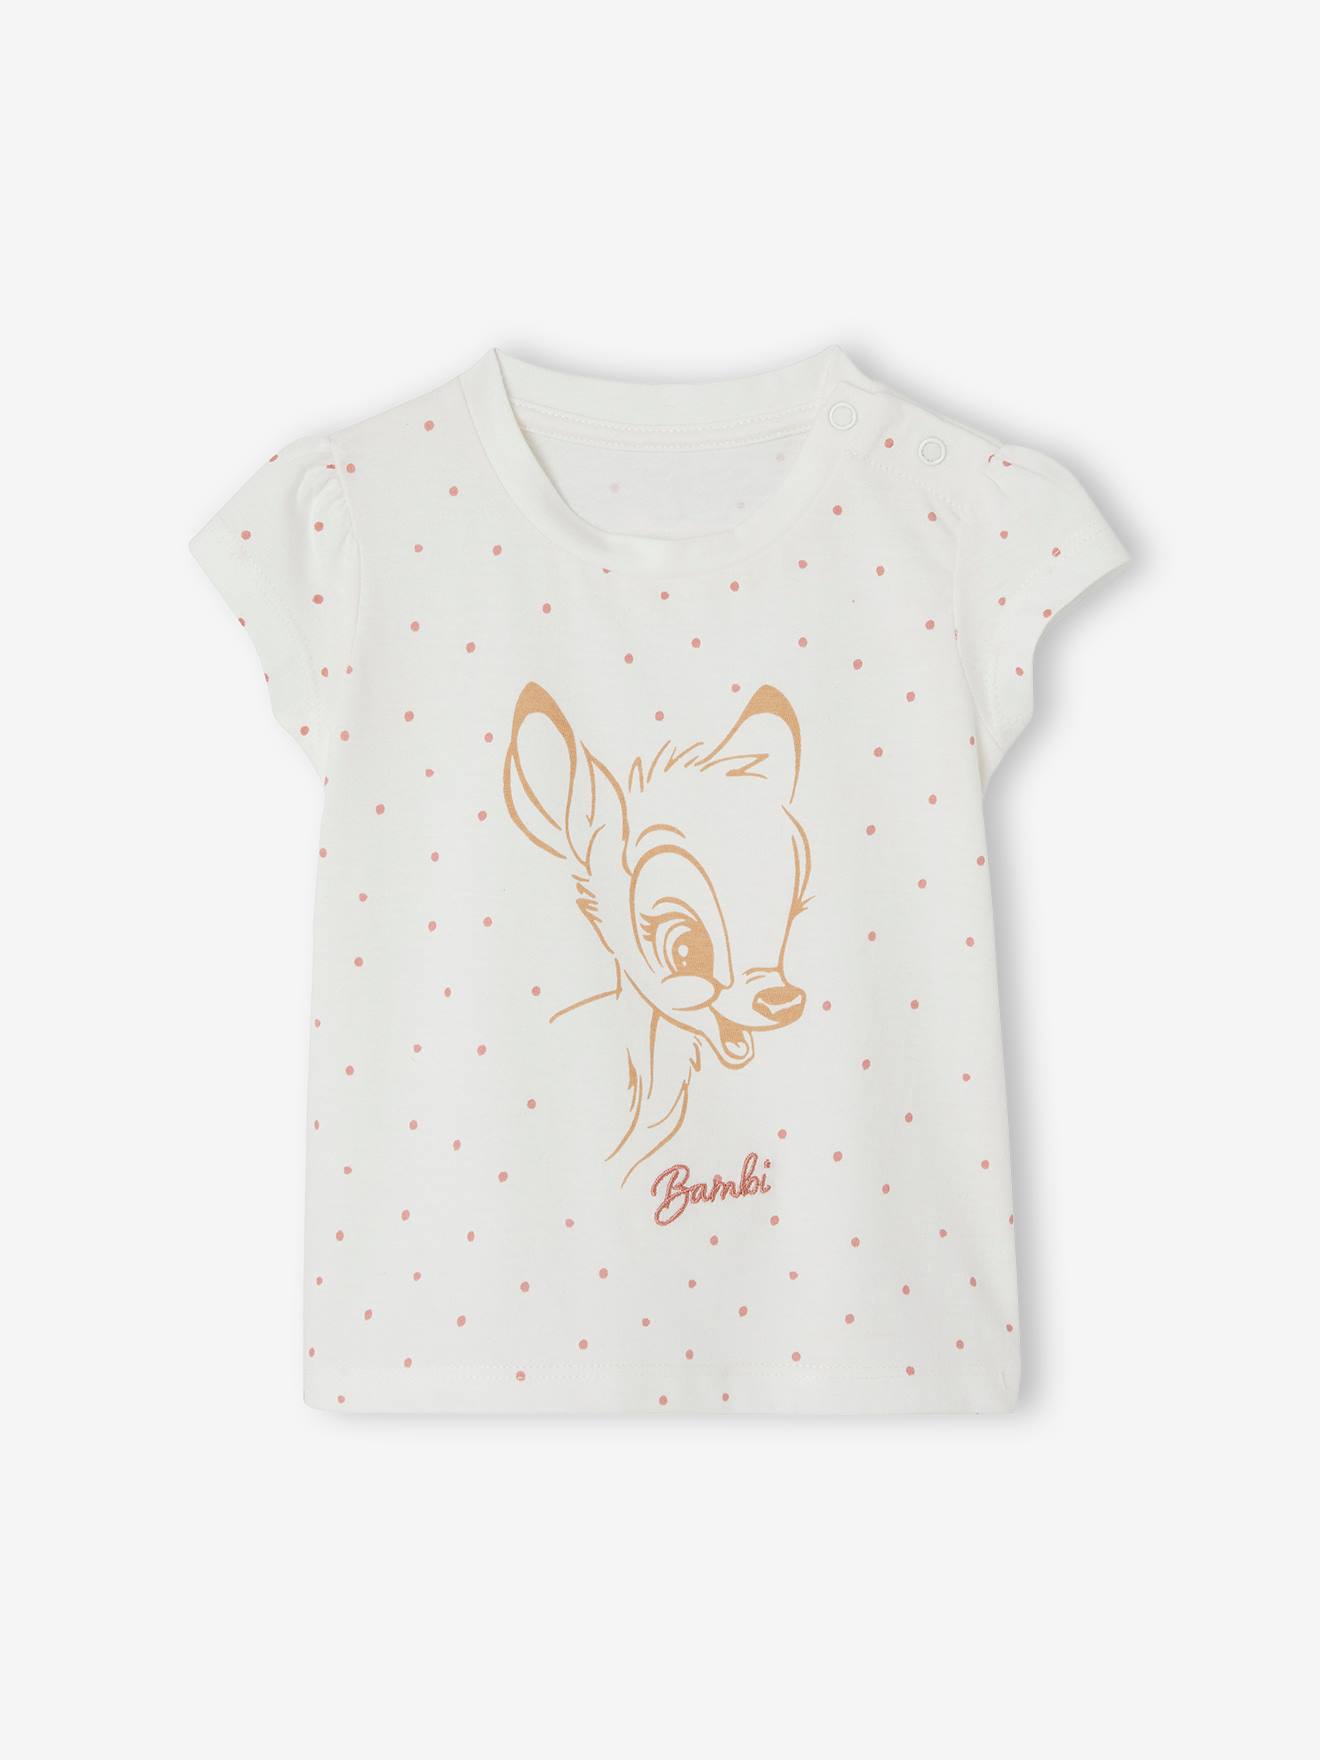 Mädchen Baby T-Shirt Baby BAMBI weiß bedruckt, - Disney